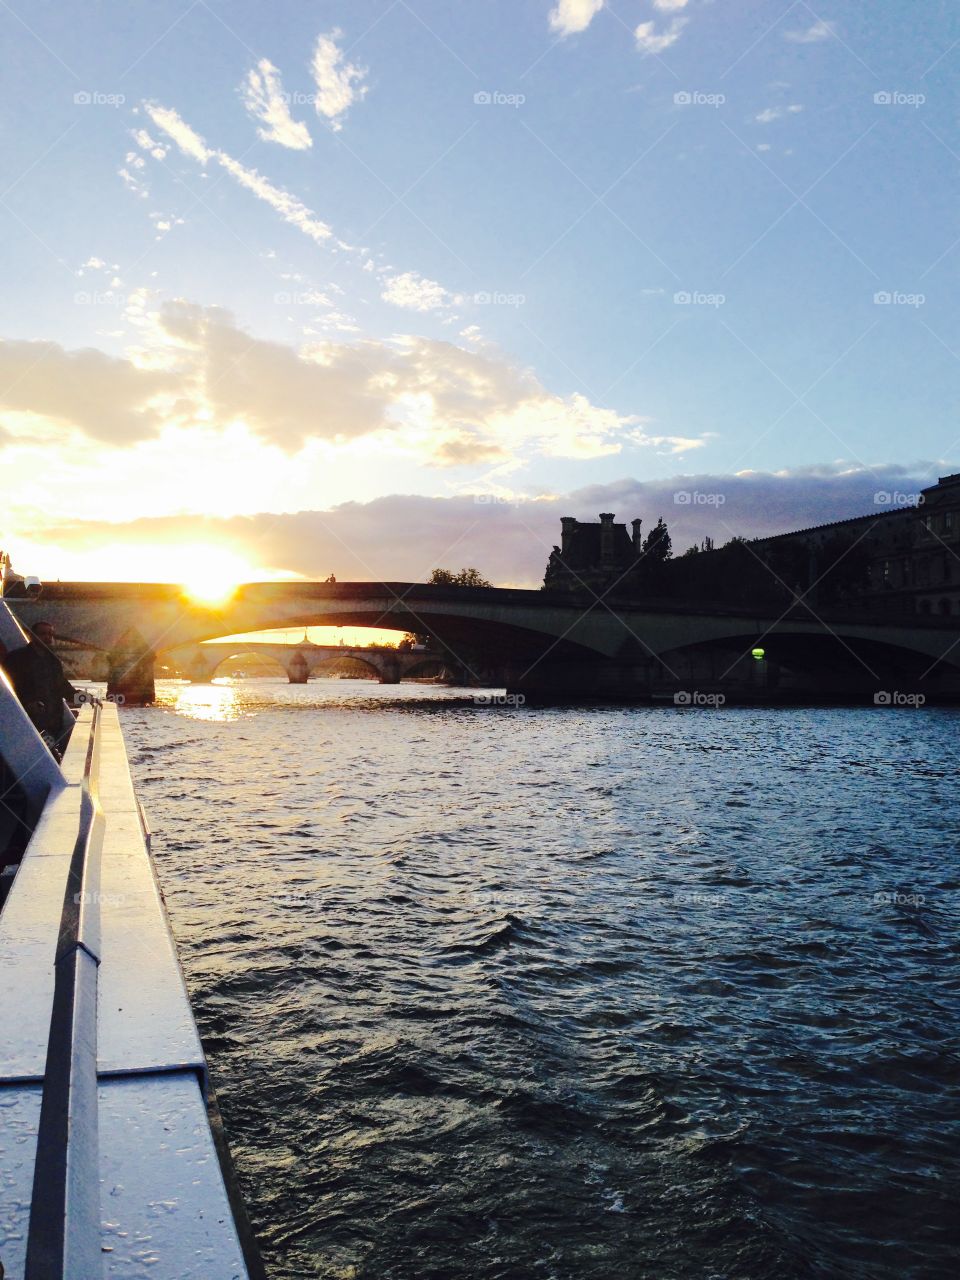 Sunset on a Boat. Paris